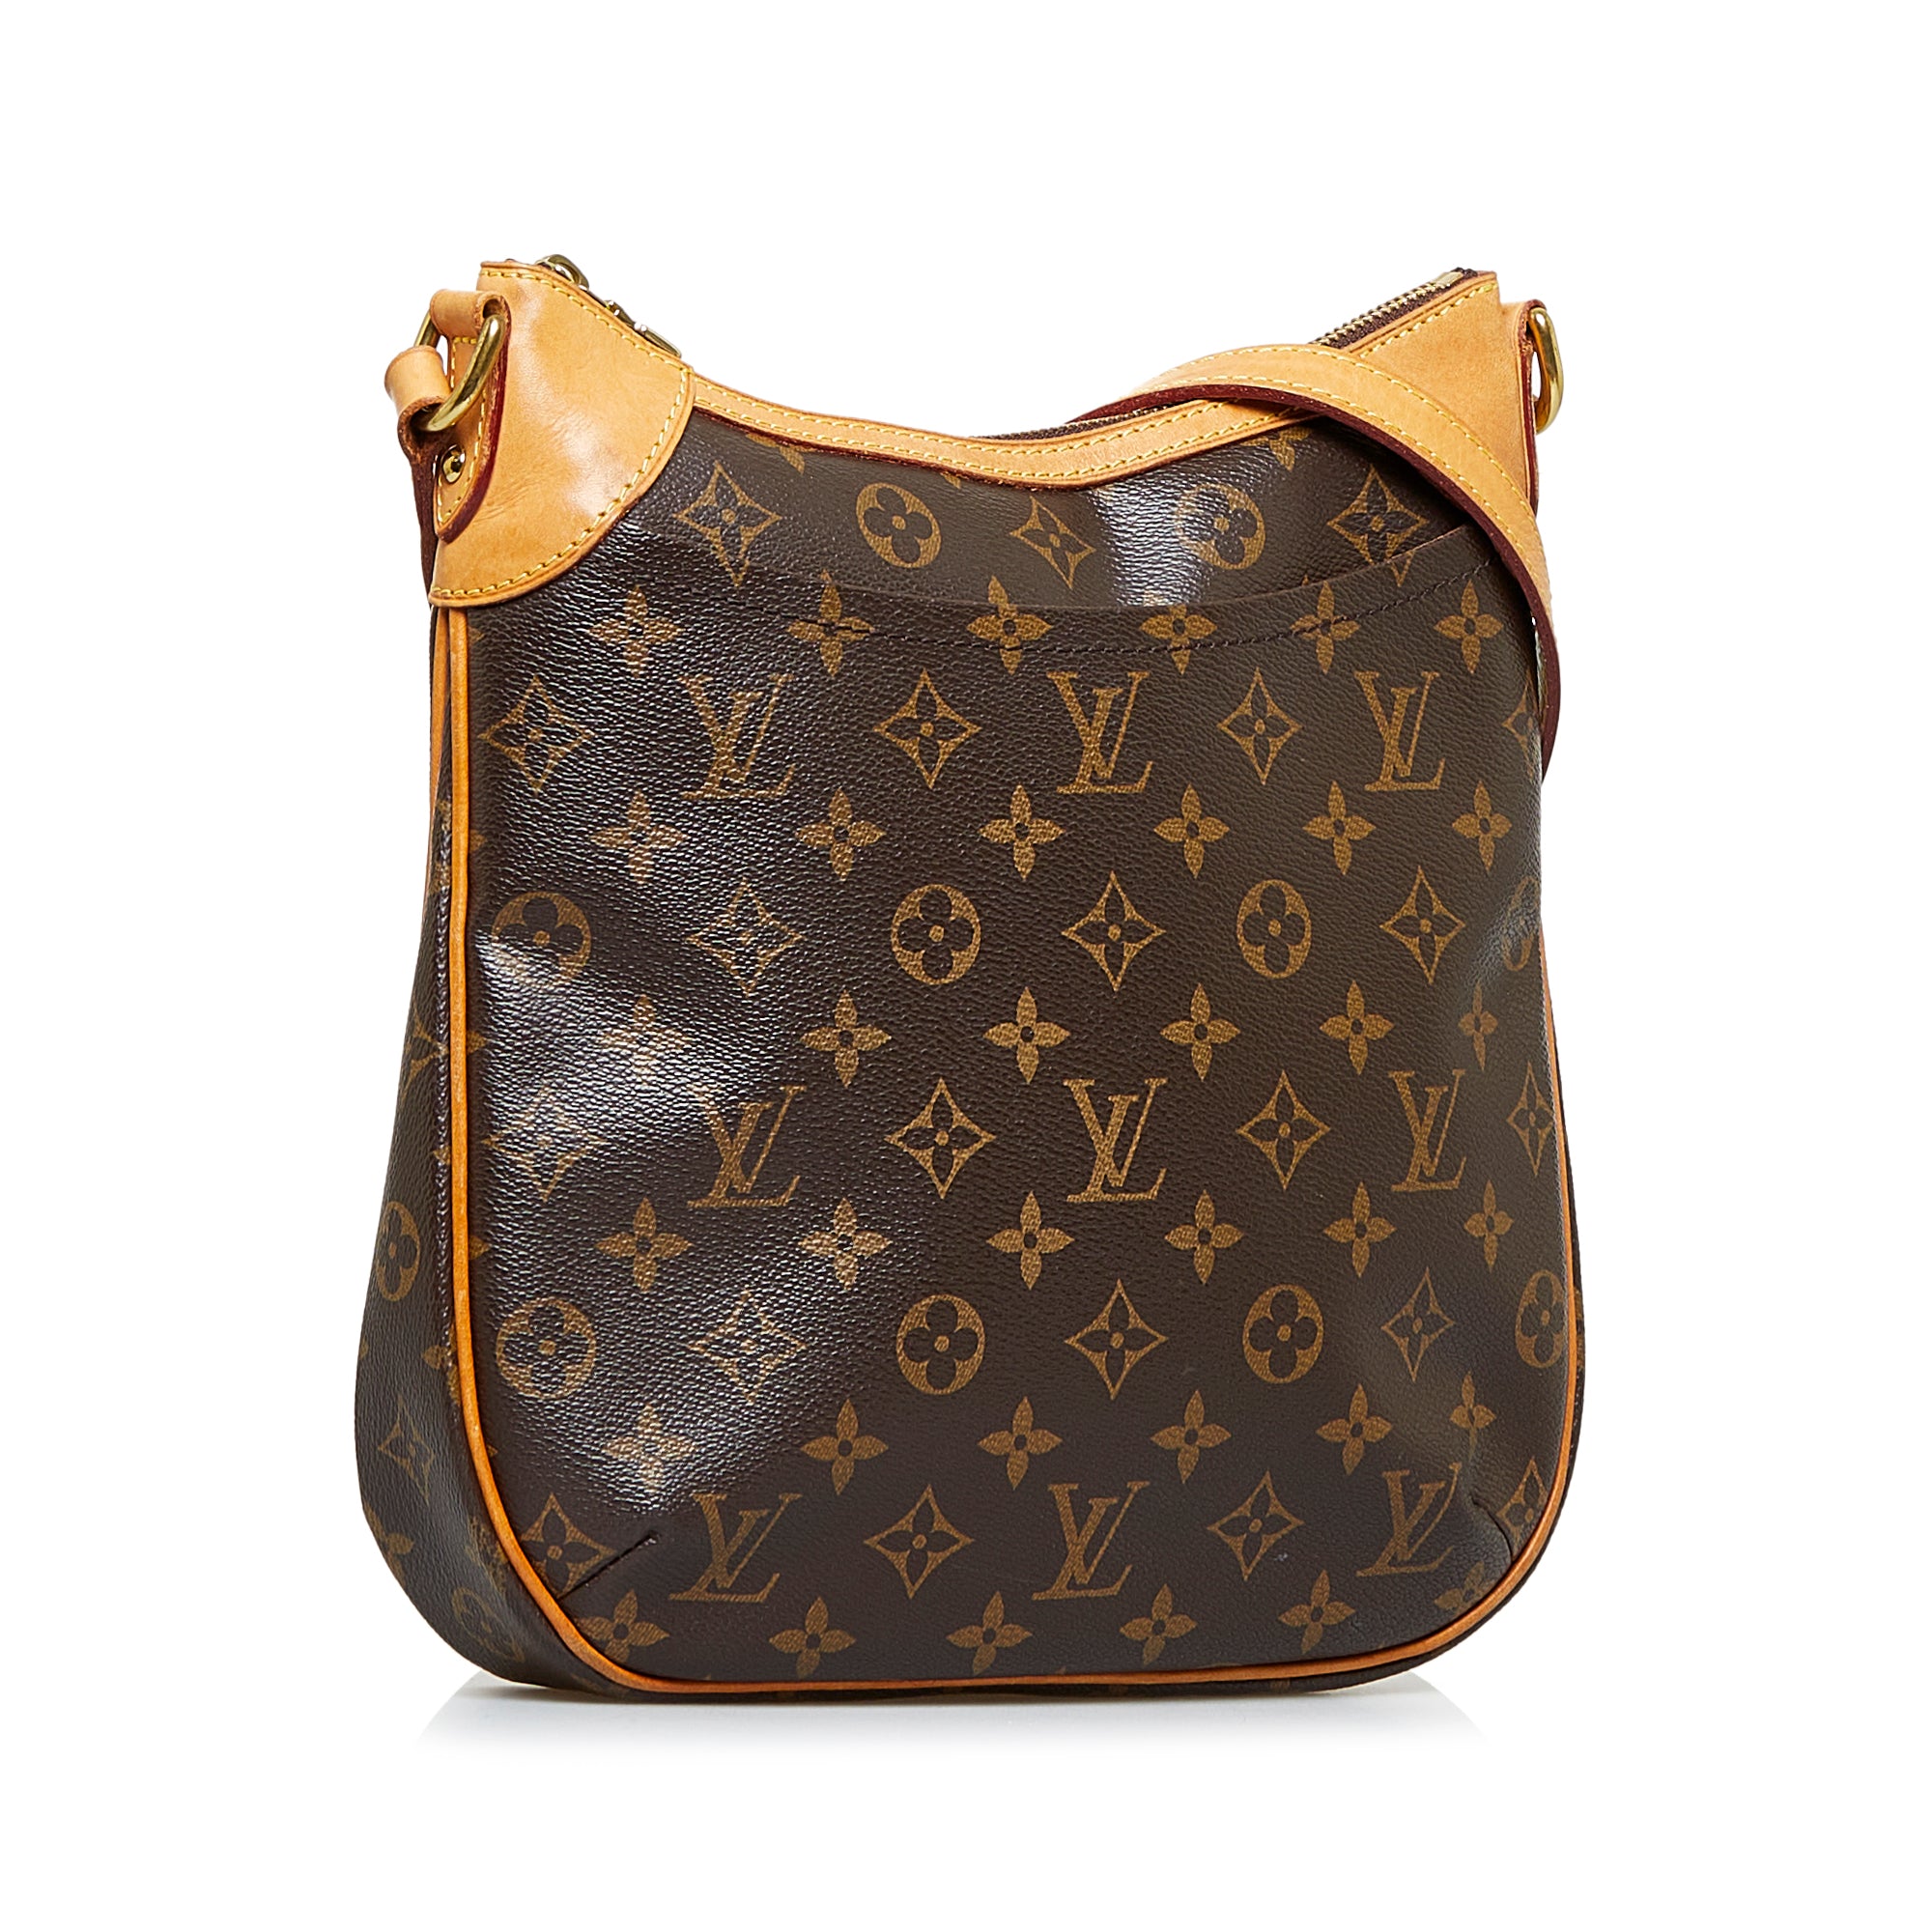 Louis Vuitton Odeon Pm M56390 Women's Monogram Shoulder Bag